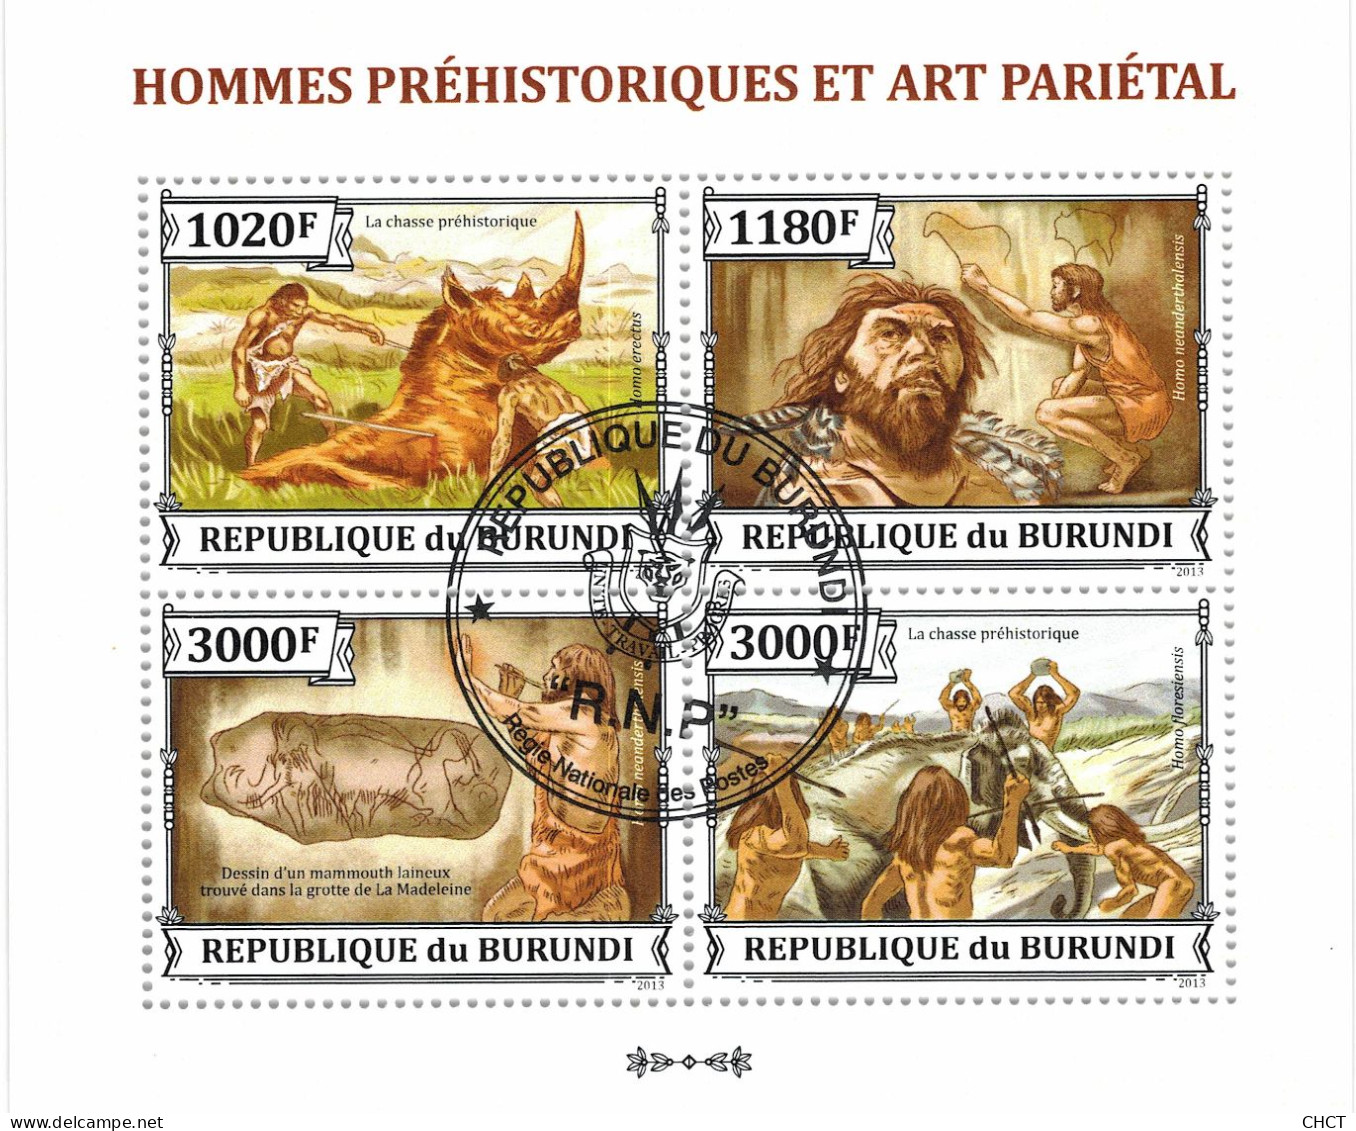 CHCT65 - Prehistoric Humans & Art, History, Stamp Mini Sheet, Used CTO, 2013, Burundi - Oblitérés